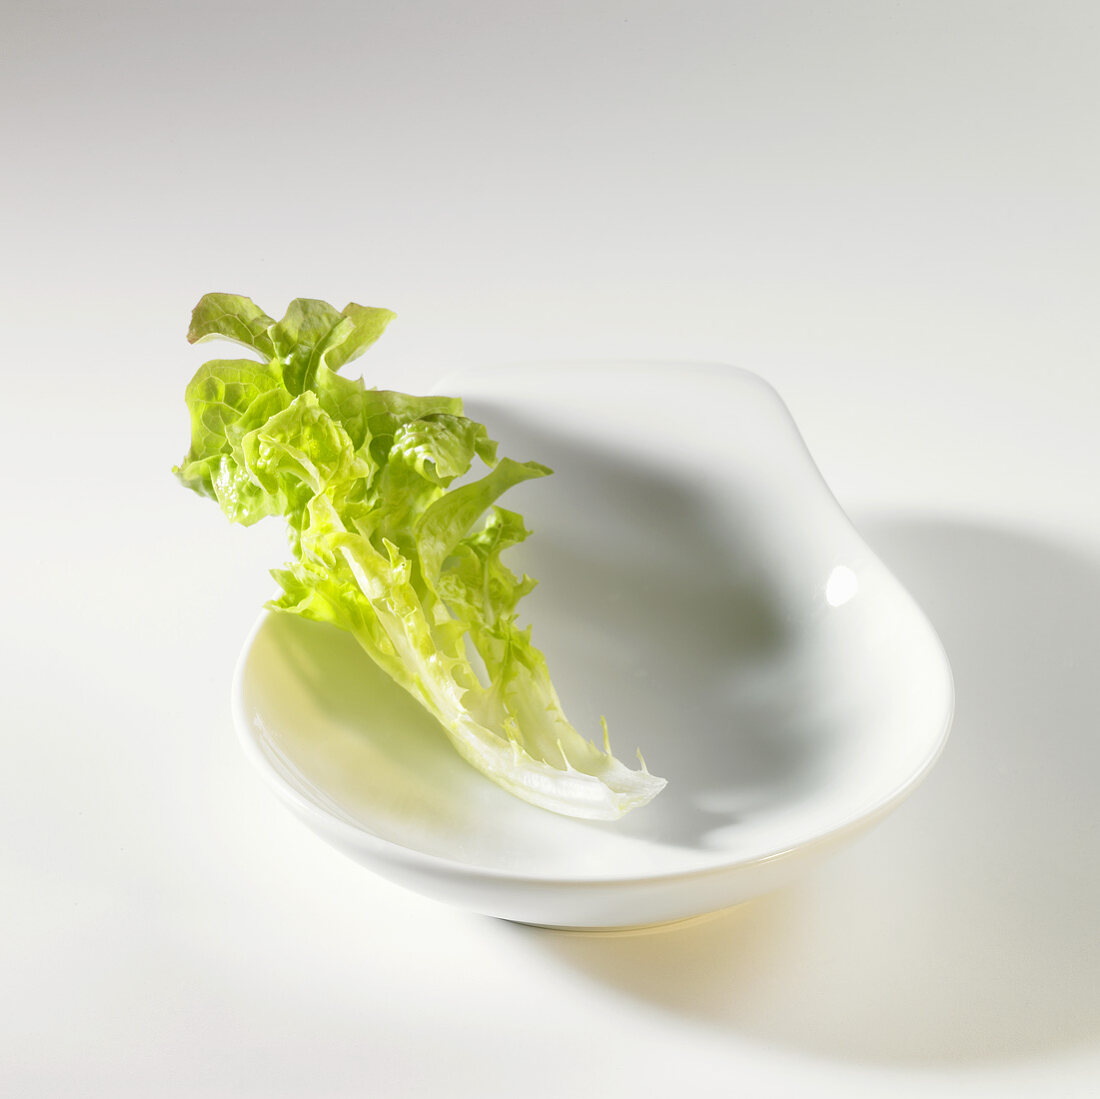 Lettuce leaf (Lollo bianco) in white dish